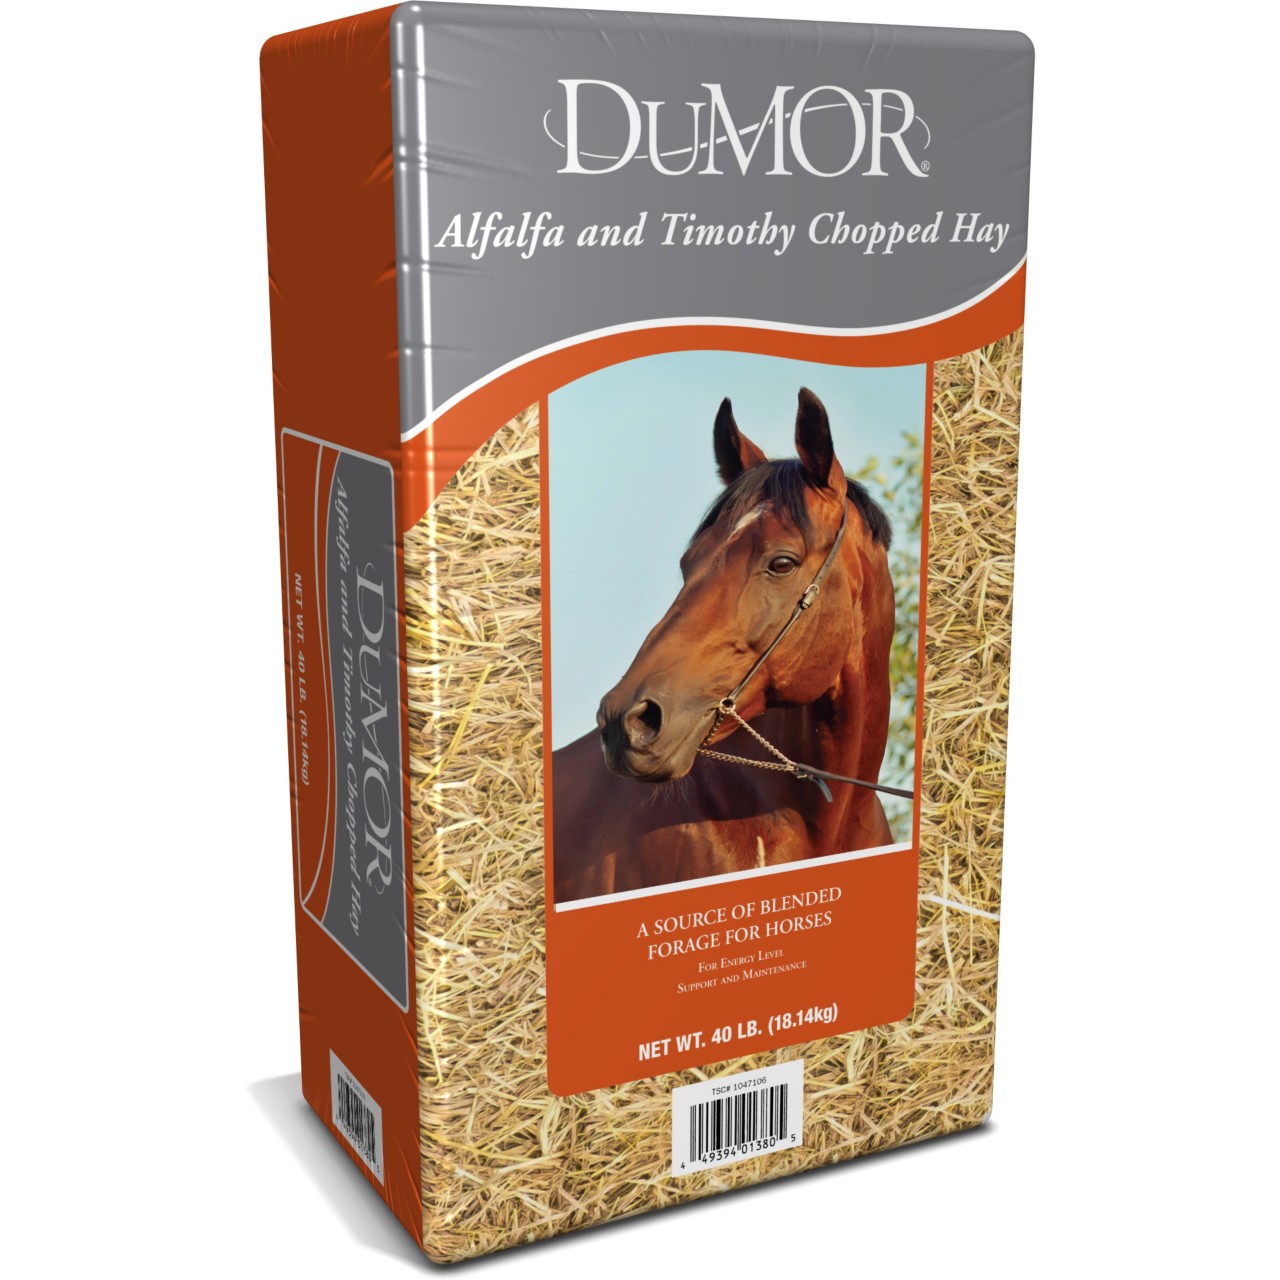 Image of Dumor horse feed.